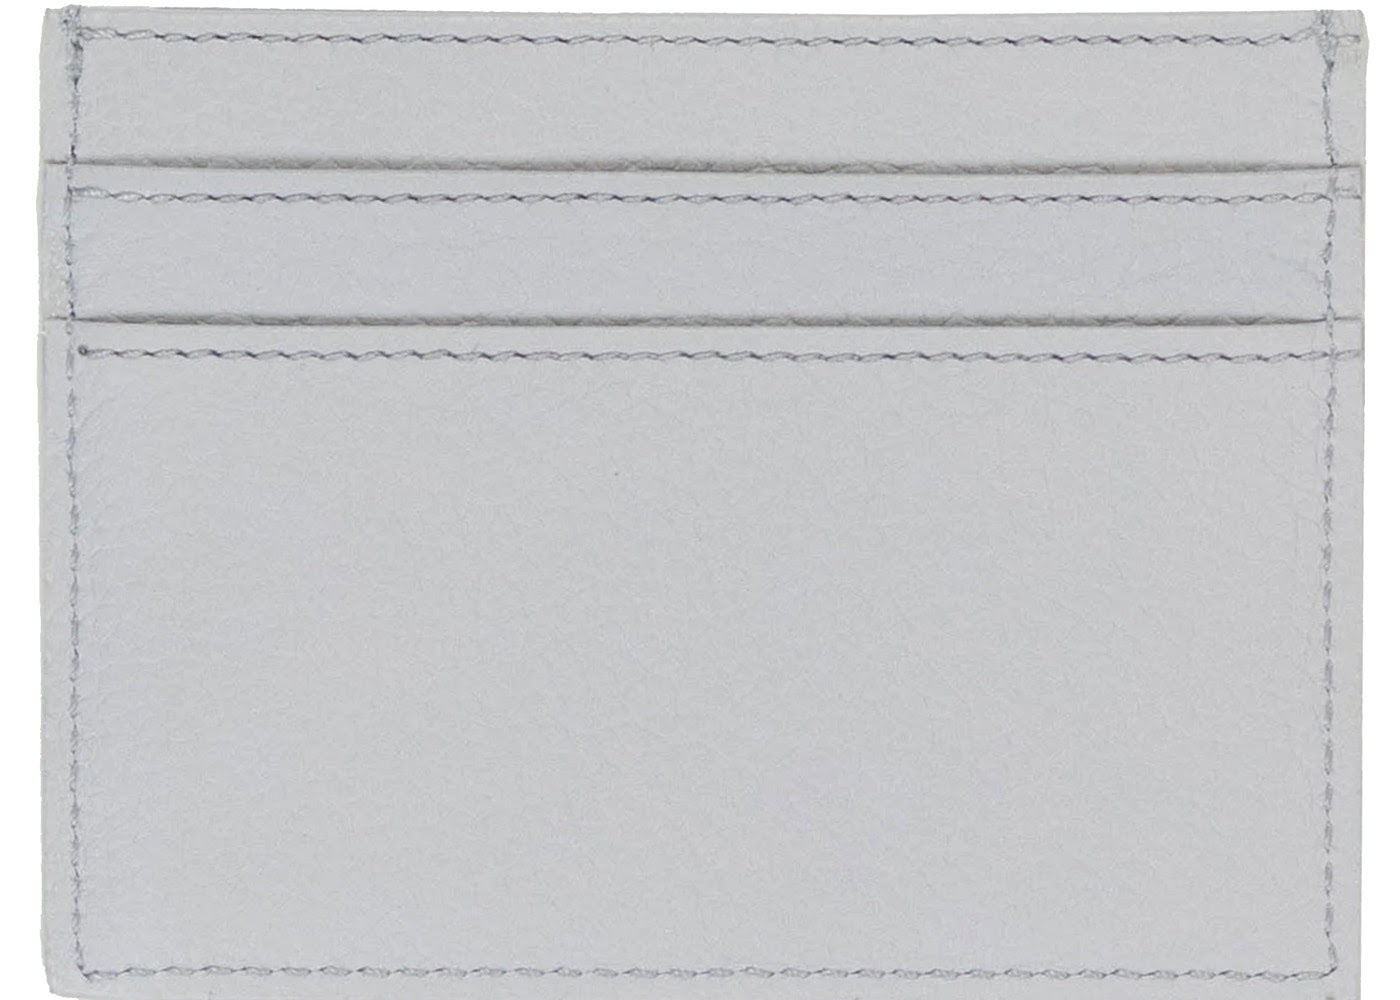 Air Dior Logo Card Holder "Grey"